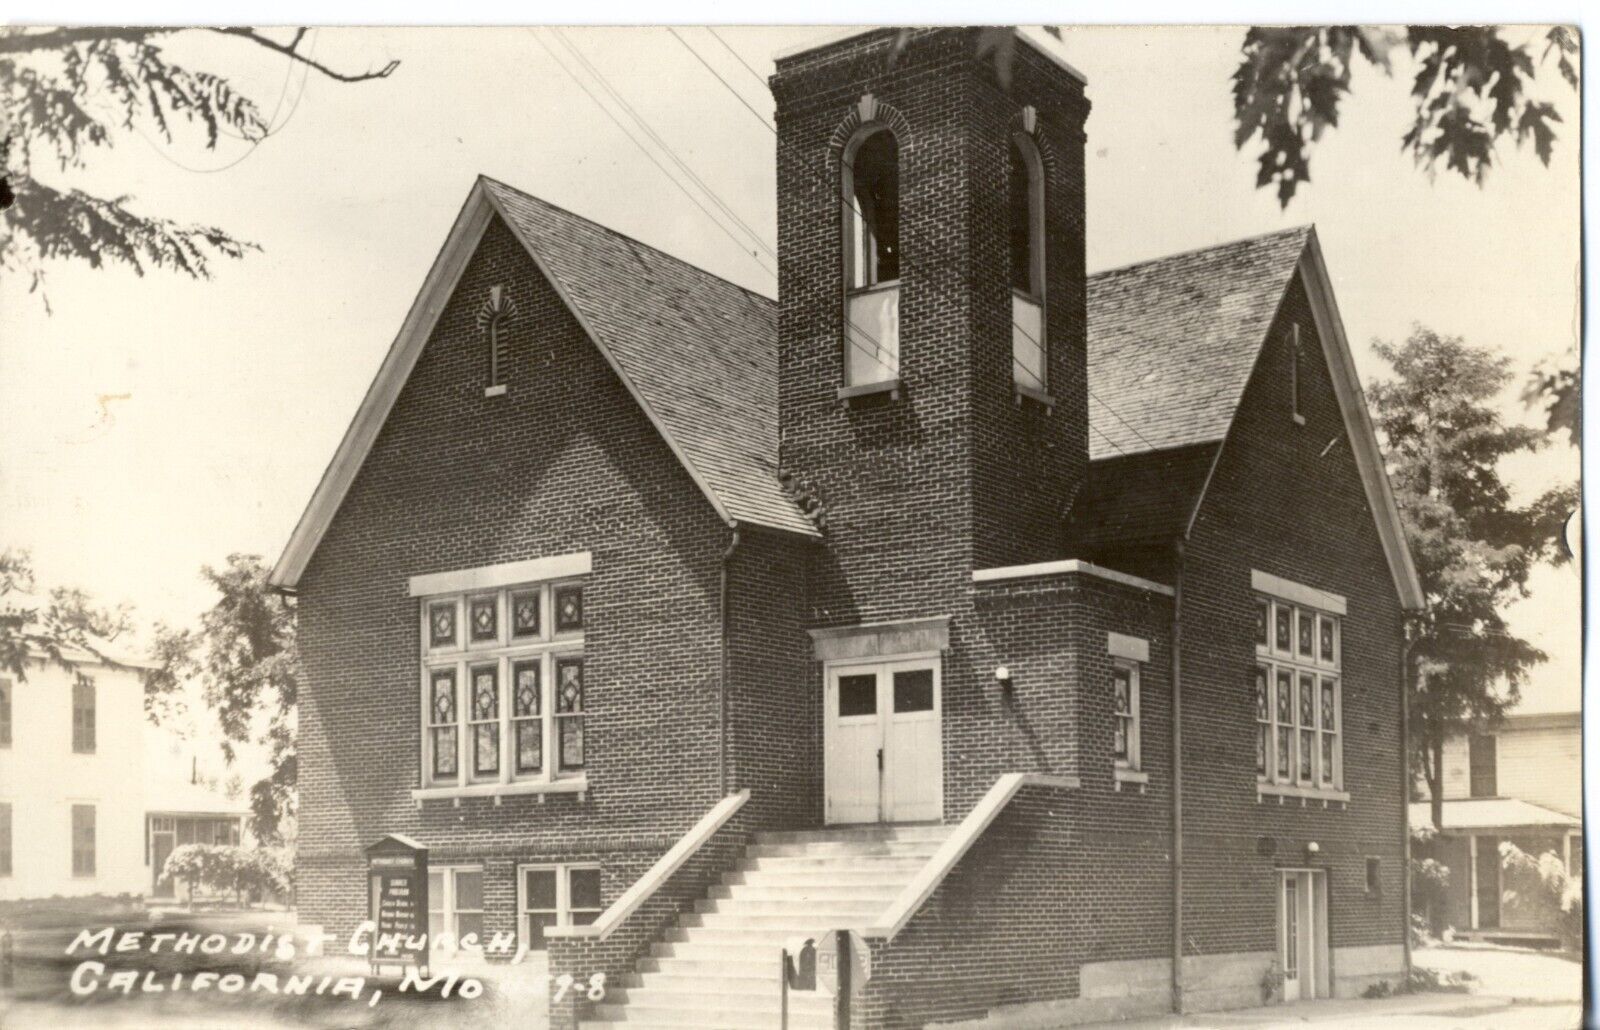 Methodist Church, California, Mo. Missouri EKC Real Photo Postcard